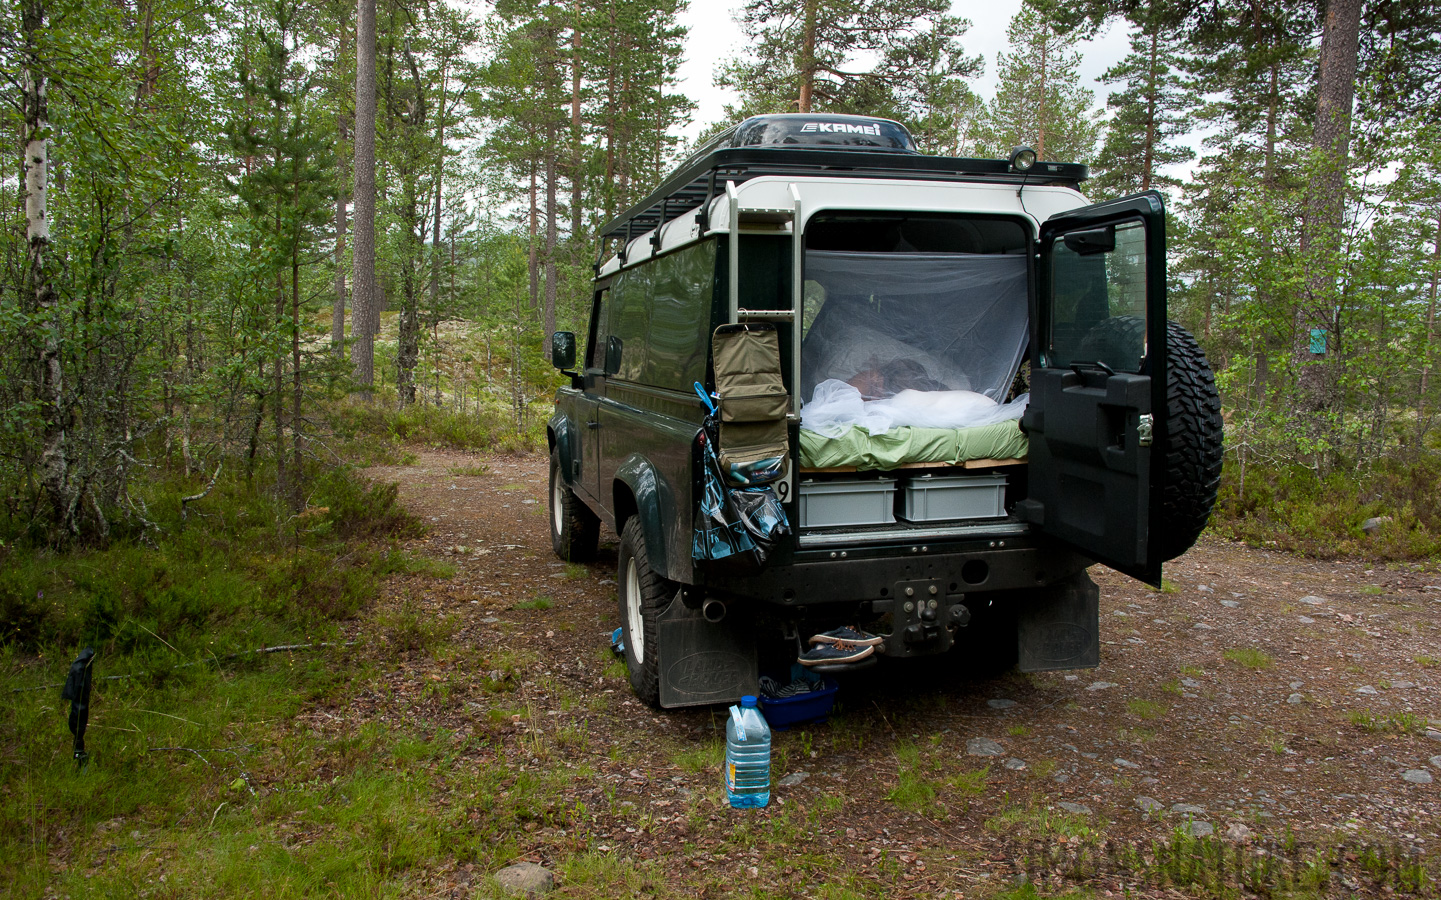 Schweden - Wilderness route [28 mm, 1/200 sec at f / 13, ISO 1600]